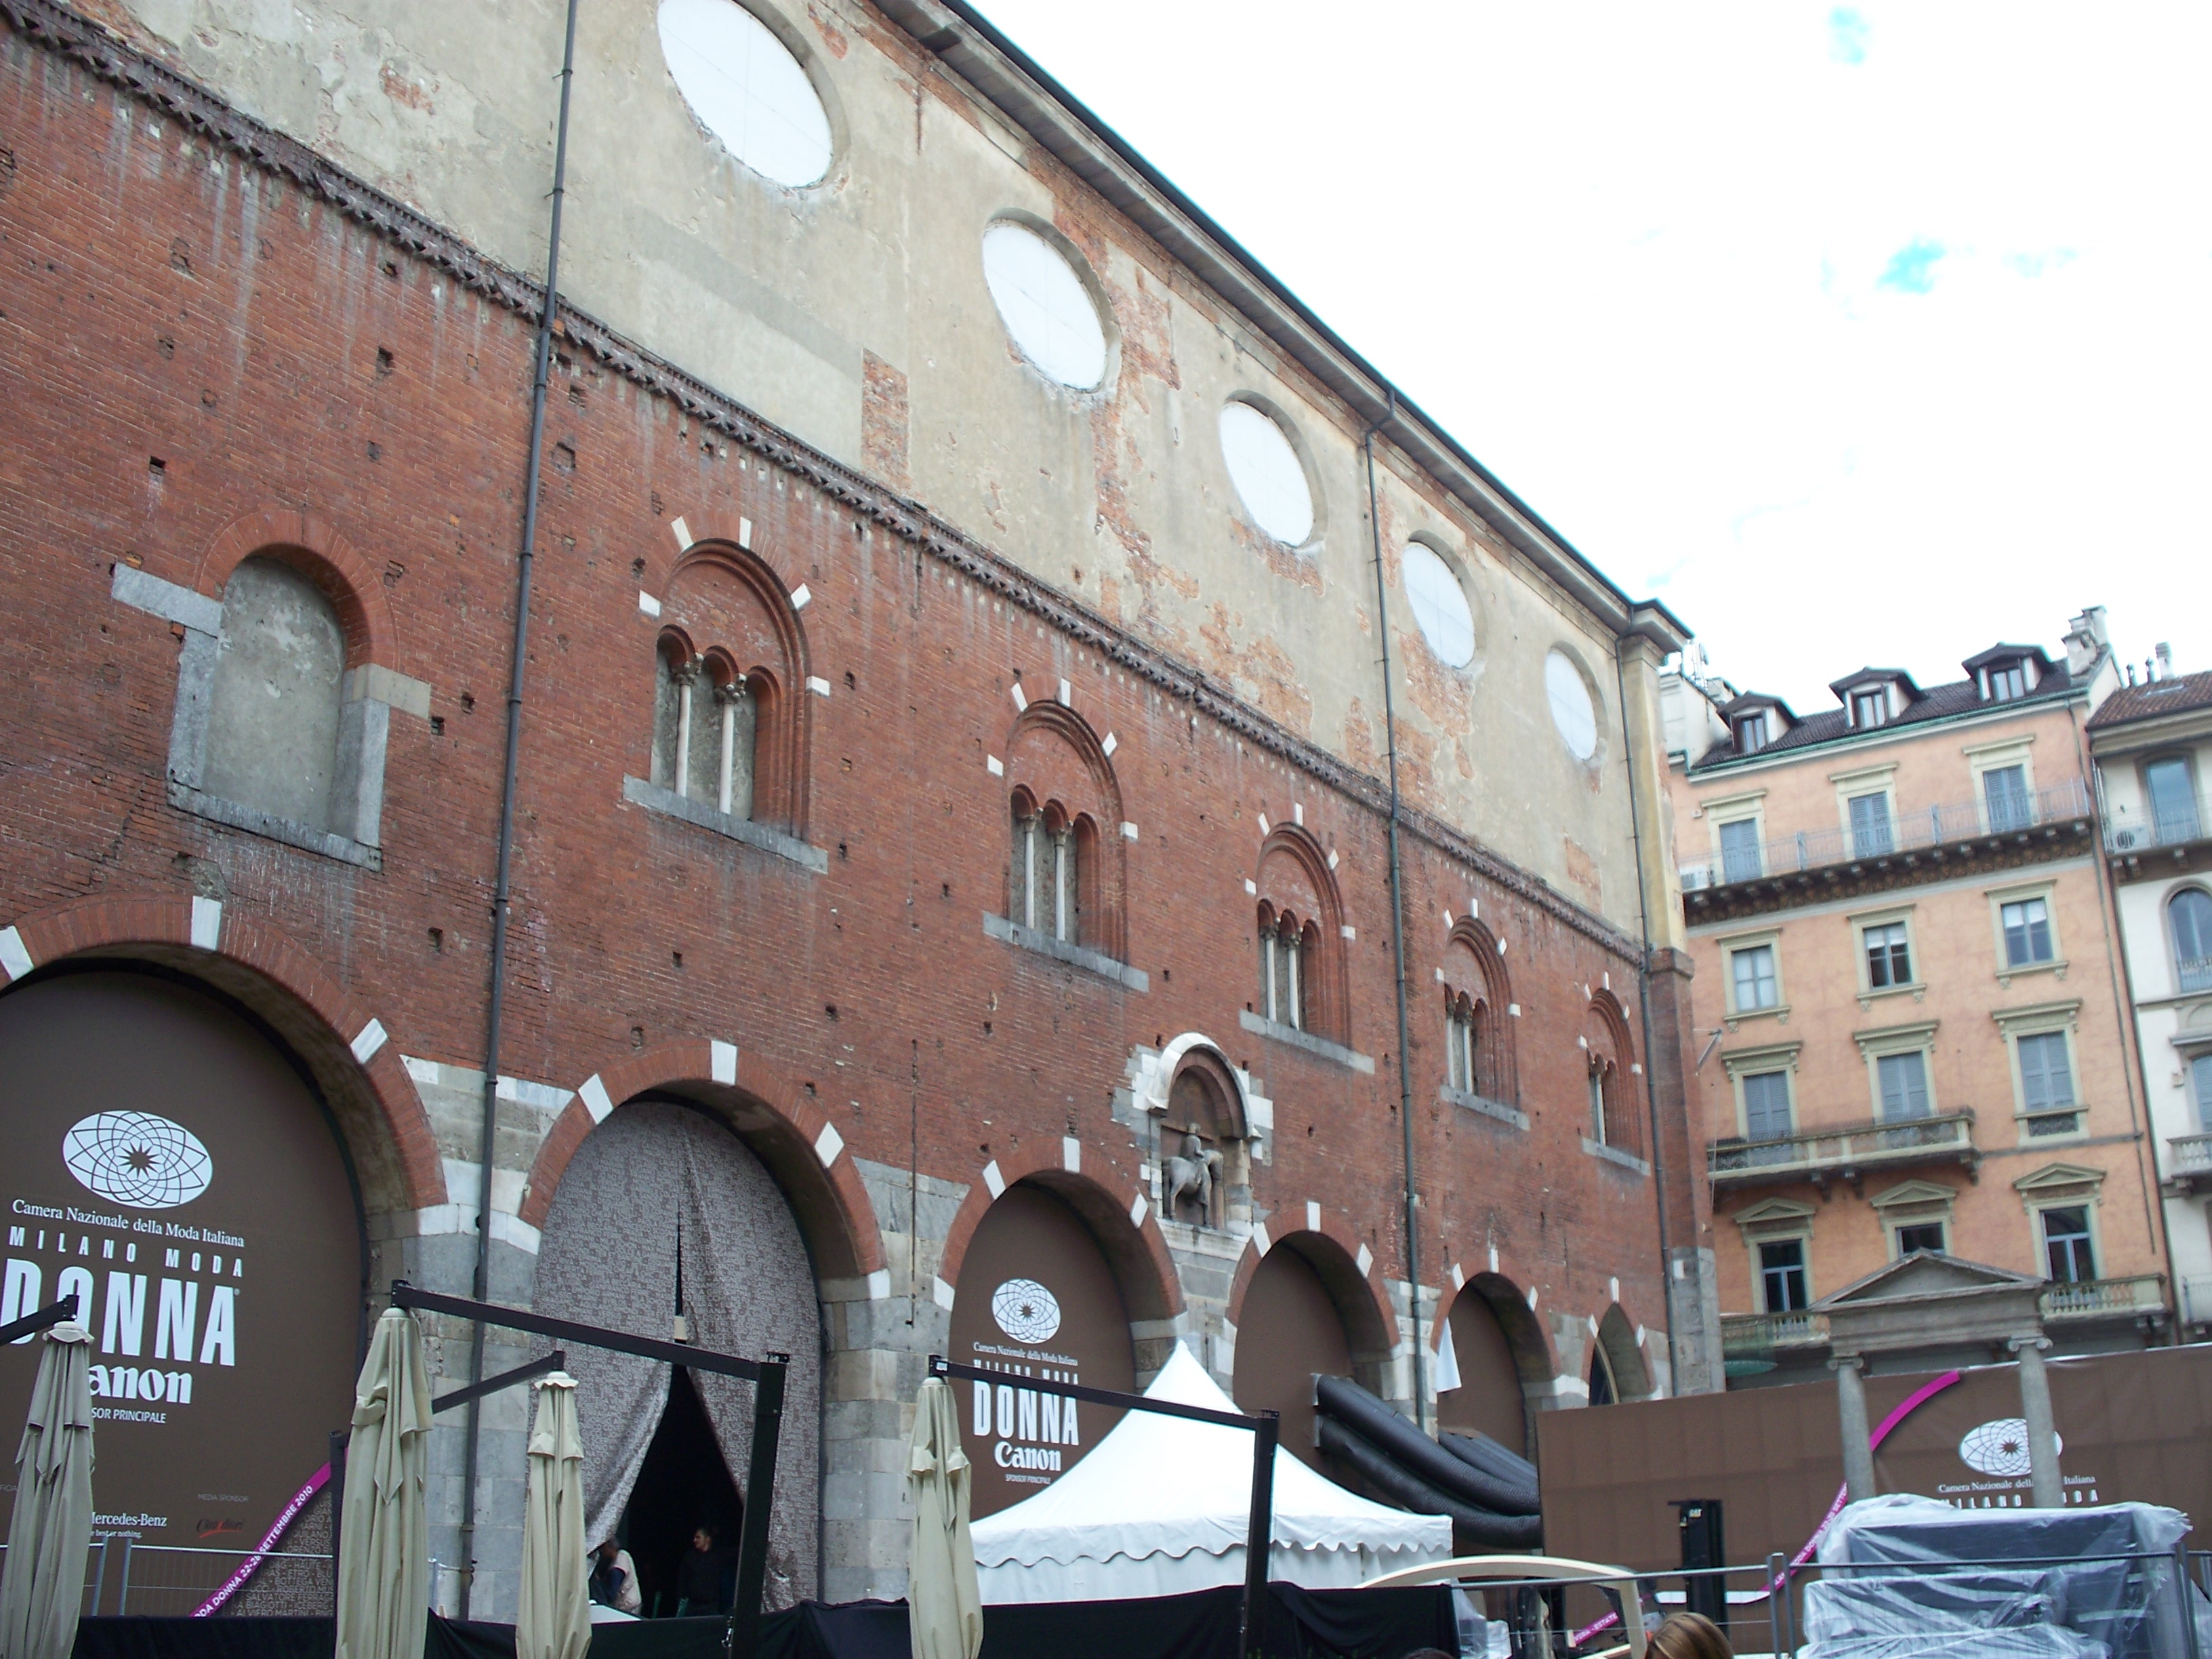 Piazza Mercanti